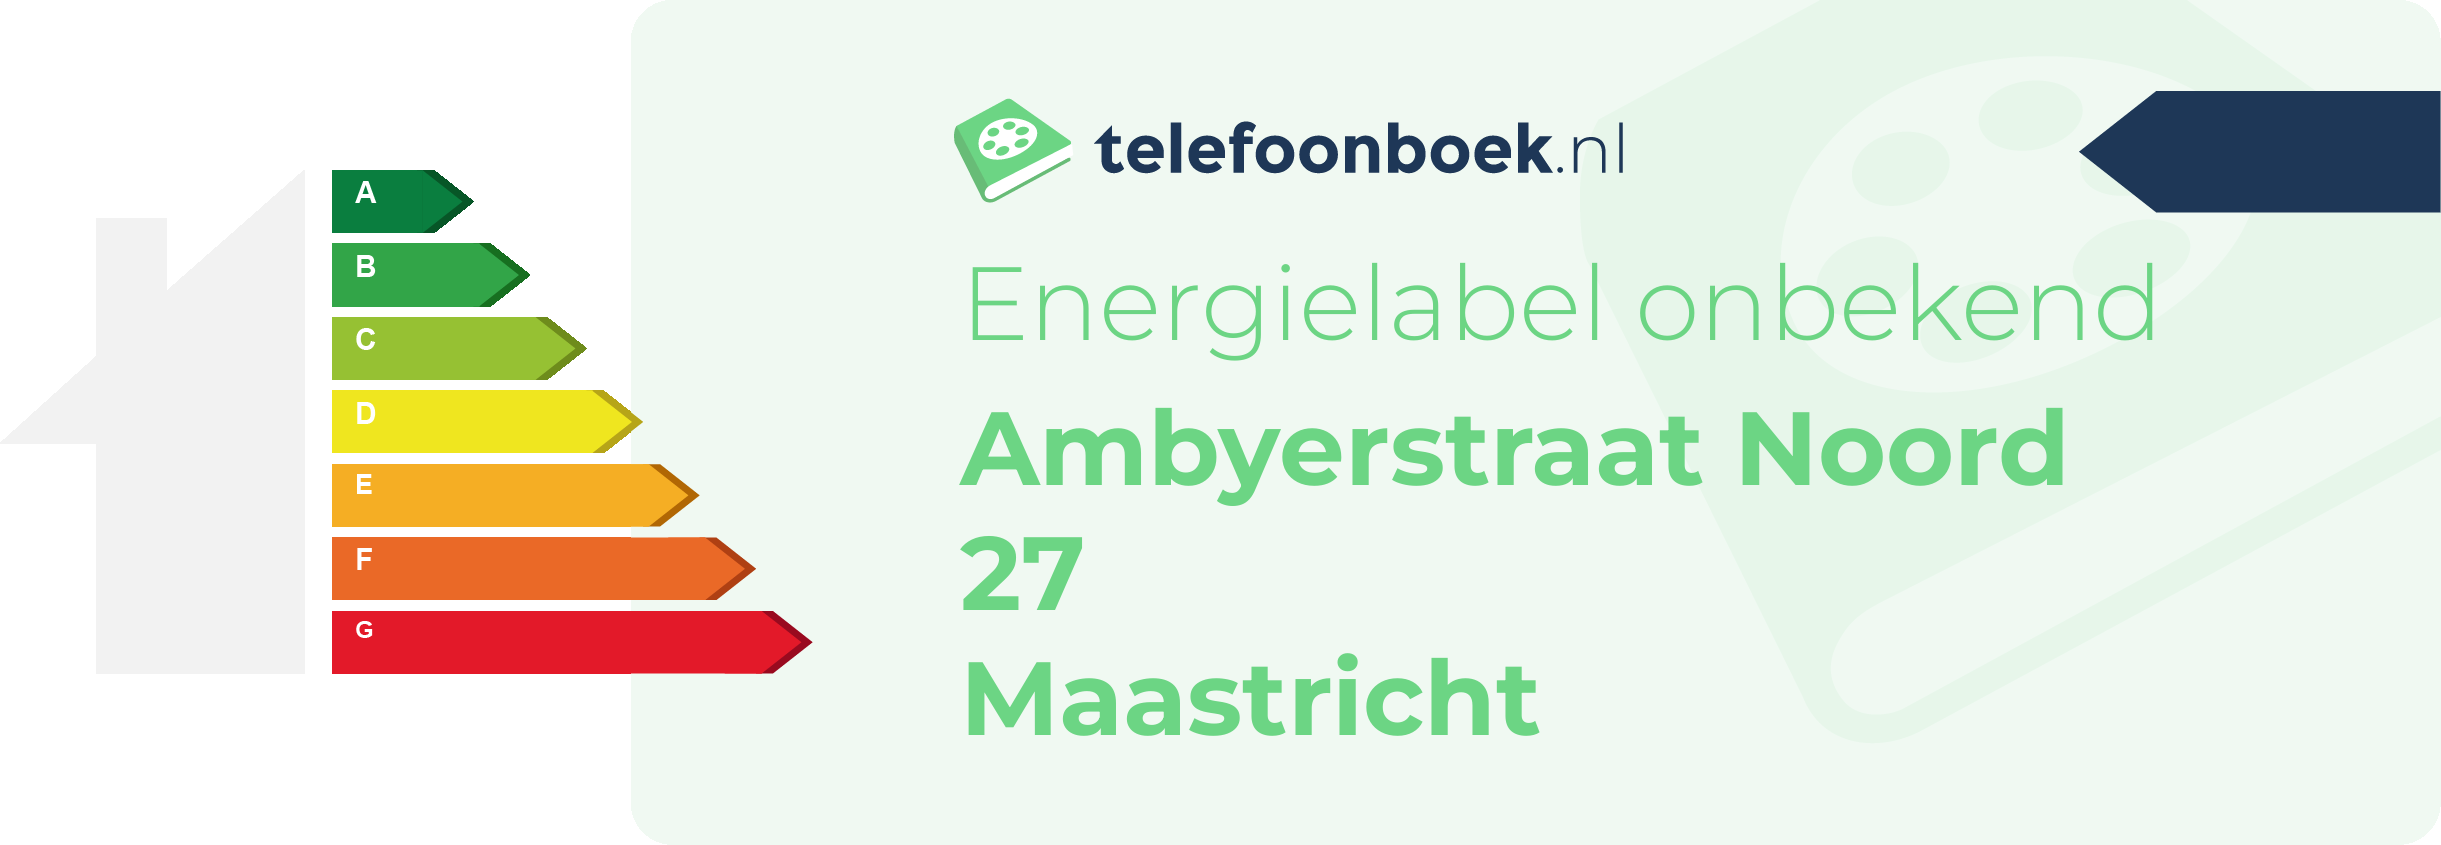 Energielabel Ambyerstraat Noord 27 Maastricht